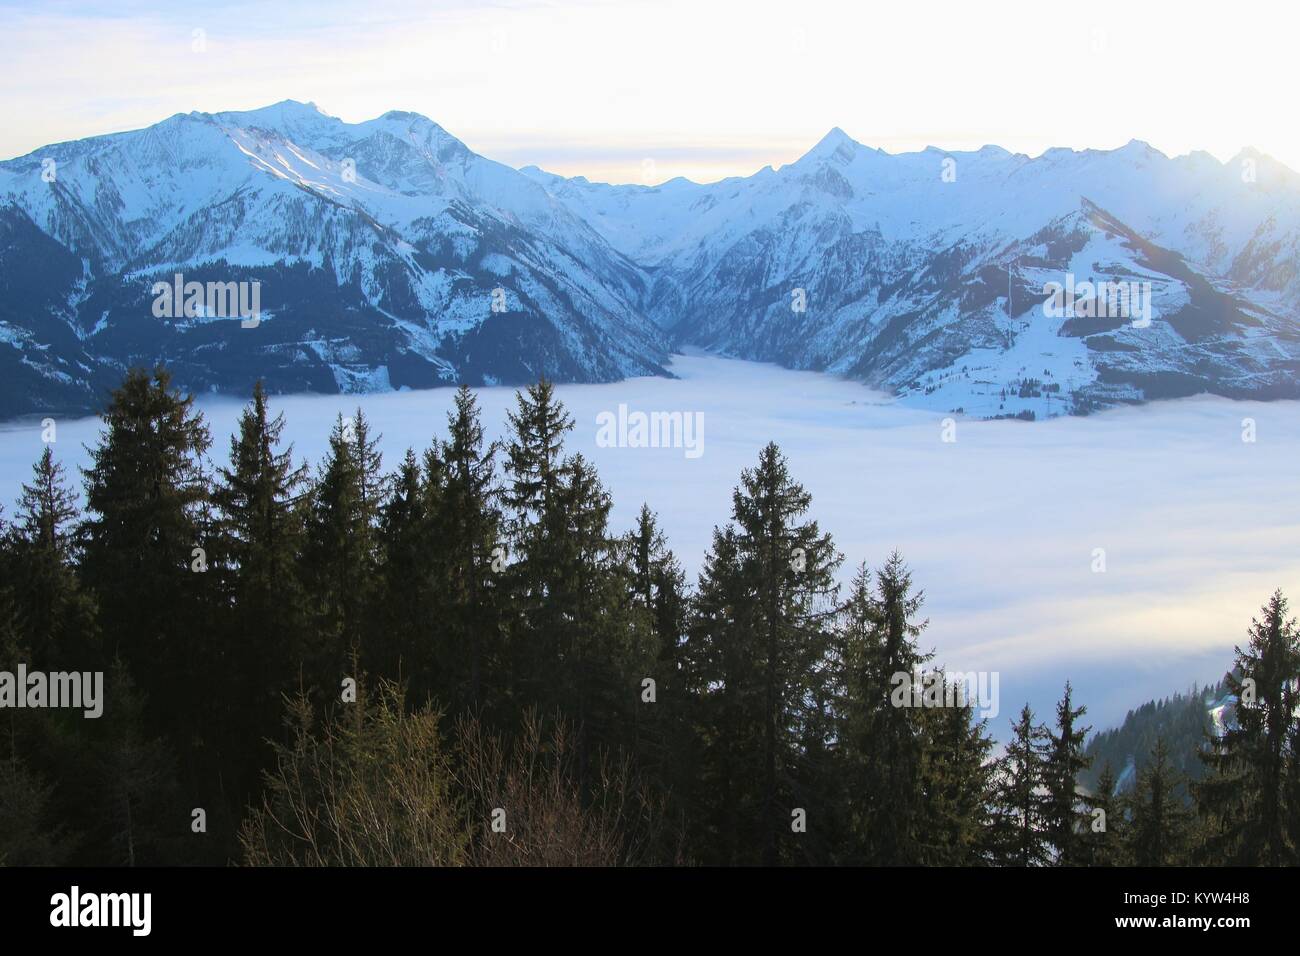 View of the Hohe Tauern mountain range with mountain Kitzsteinhorn (3200 m) in the region Zell am See - Kaprun, in winter. Austria, Europe. Stock Photo